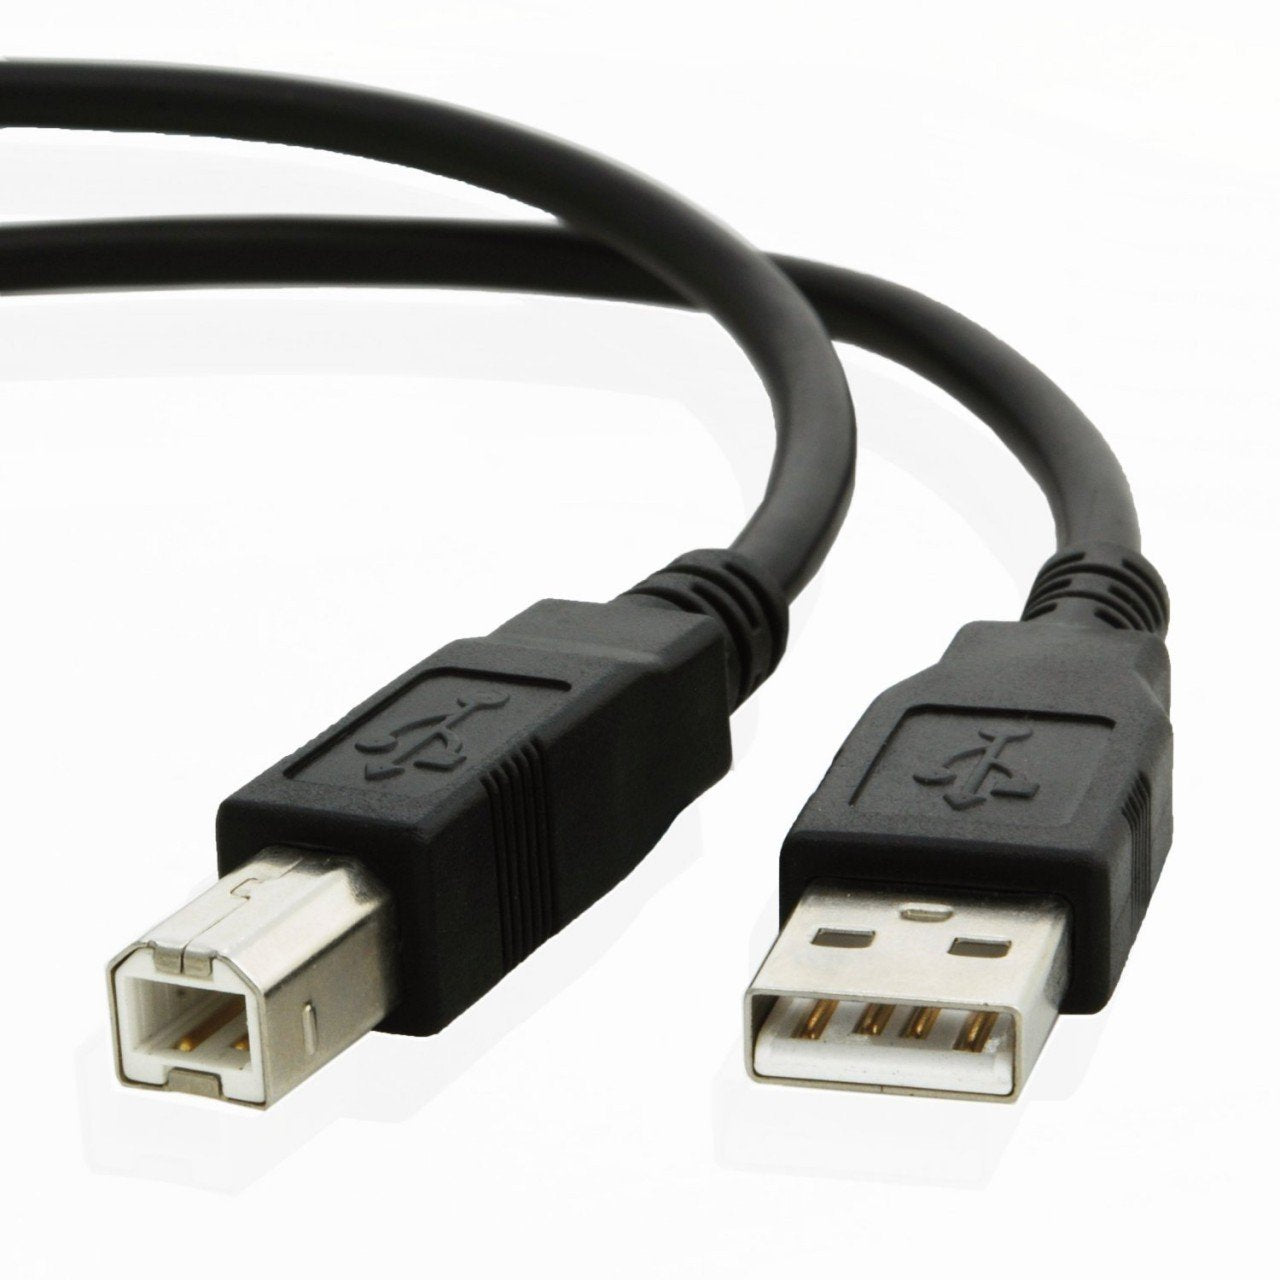 USB cable for Hp LASERJET PRO M477fdw